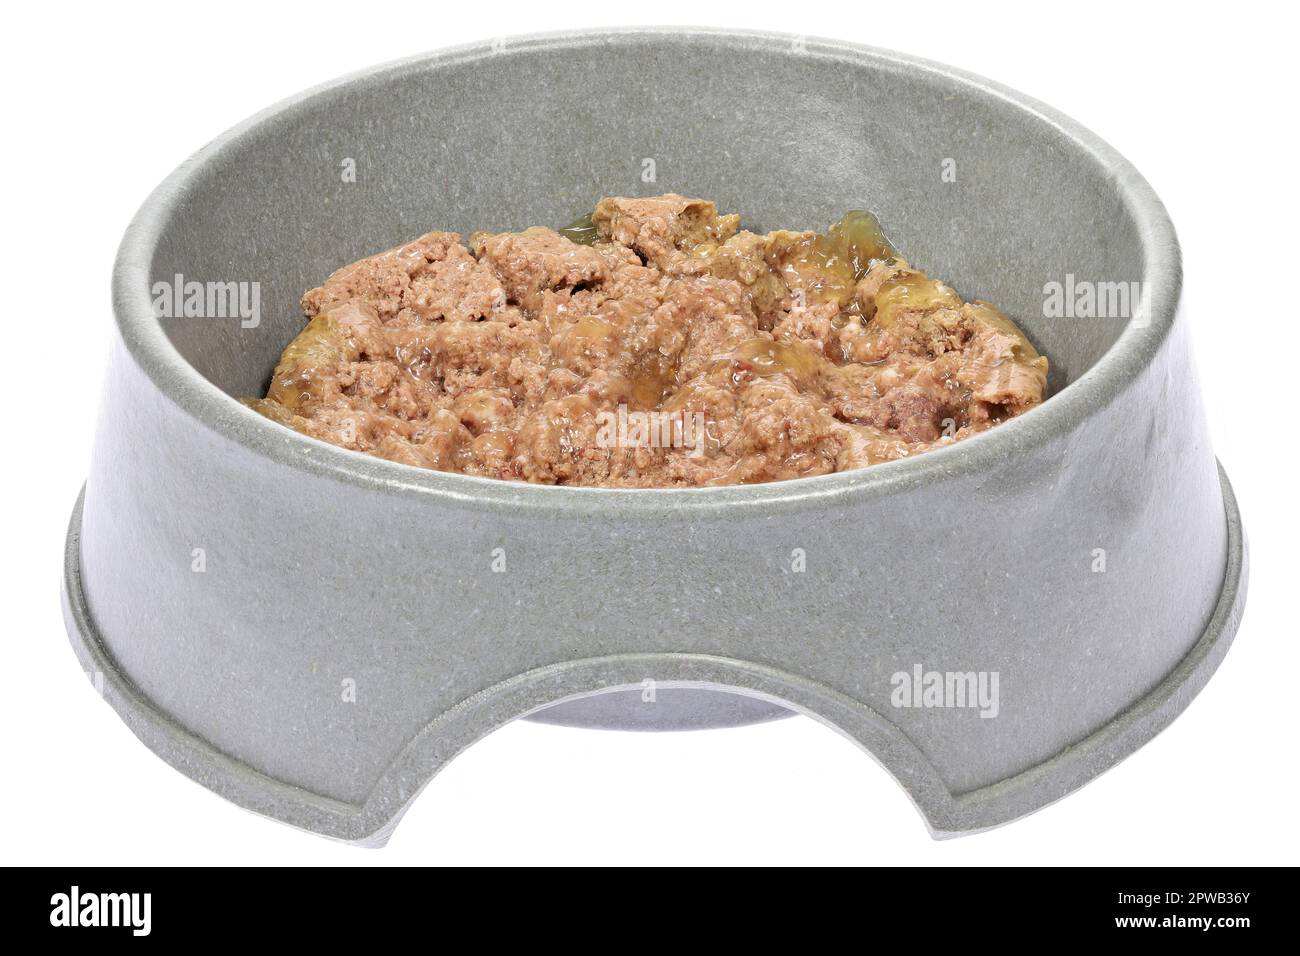 dog food in feeding bowl isolated on white background Stock Photo